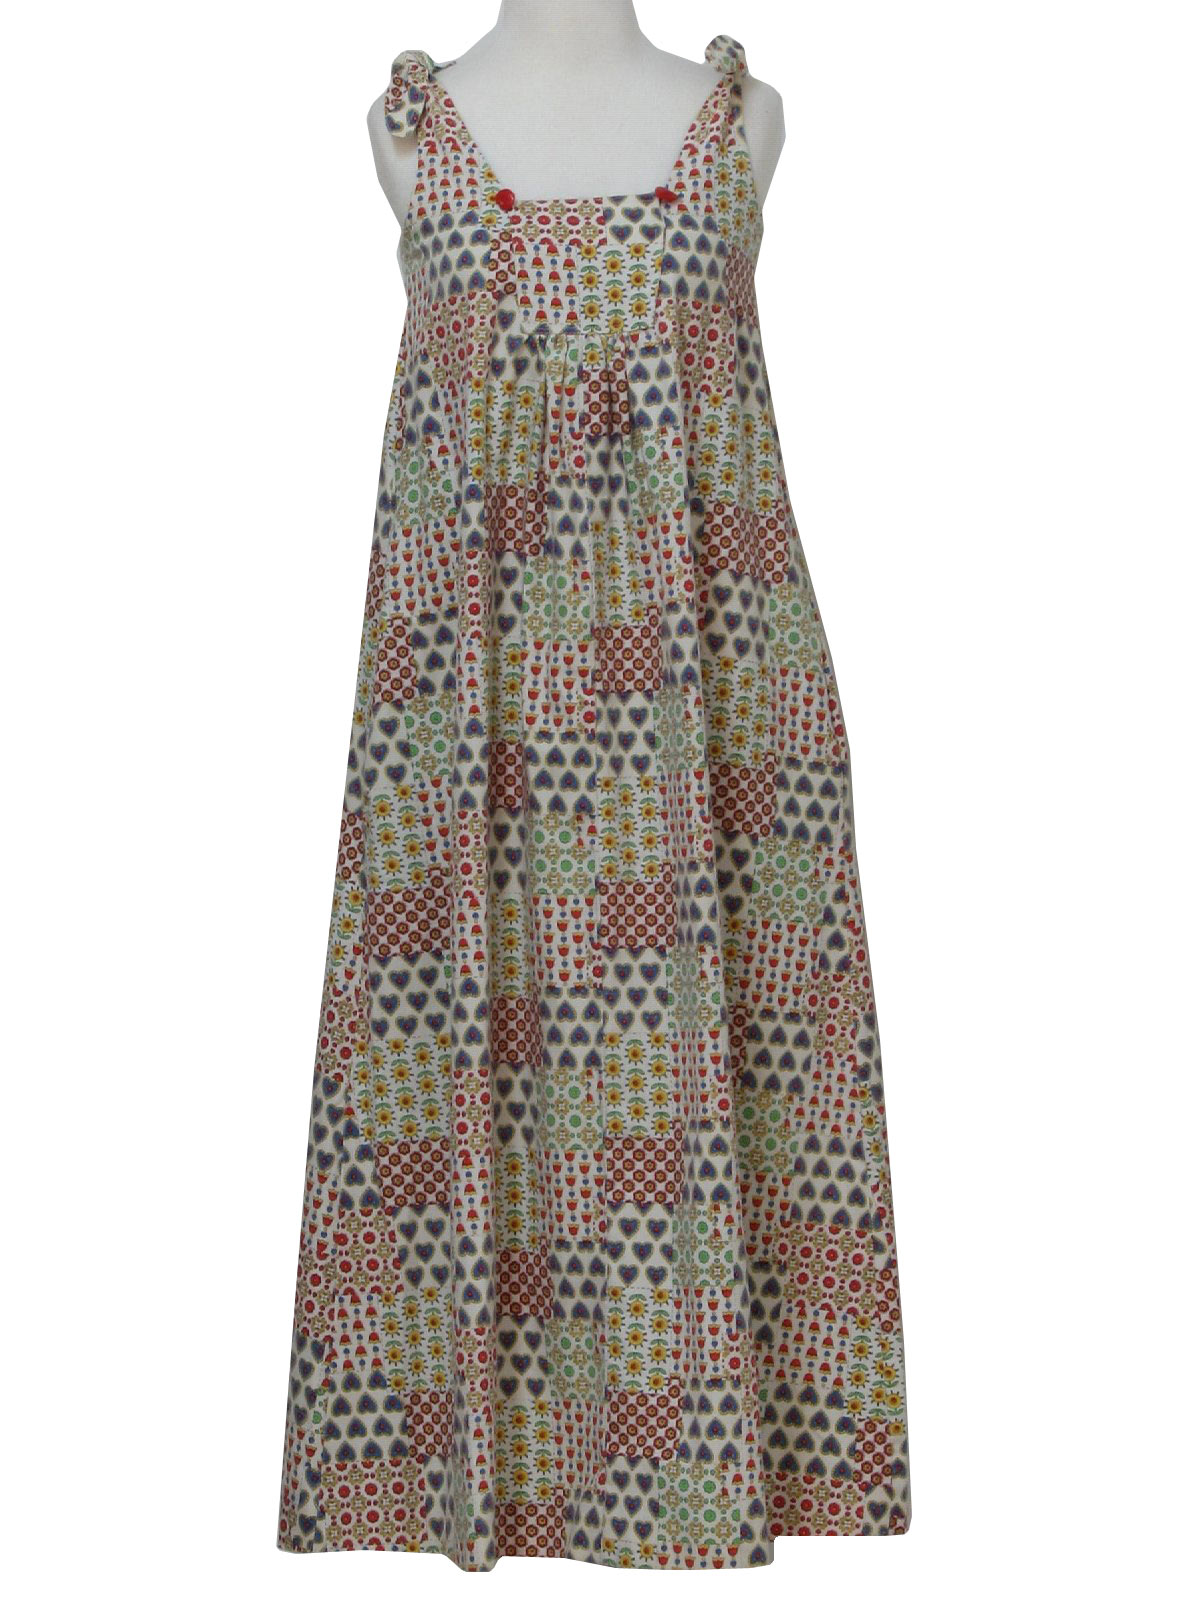 Retro 1980s Hippie Dress: 80s -No Label- Womens sturdy cotton sun dress ...